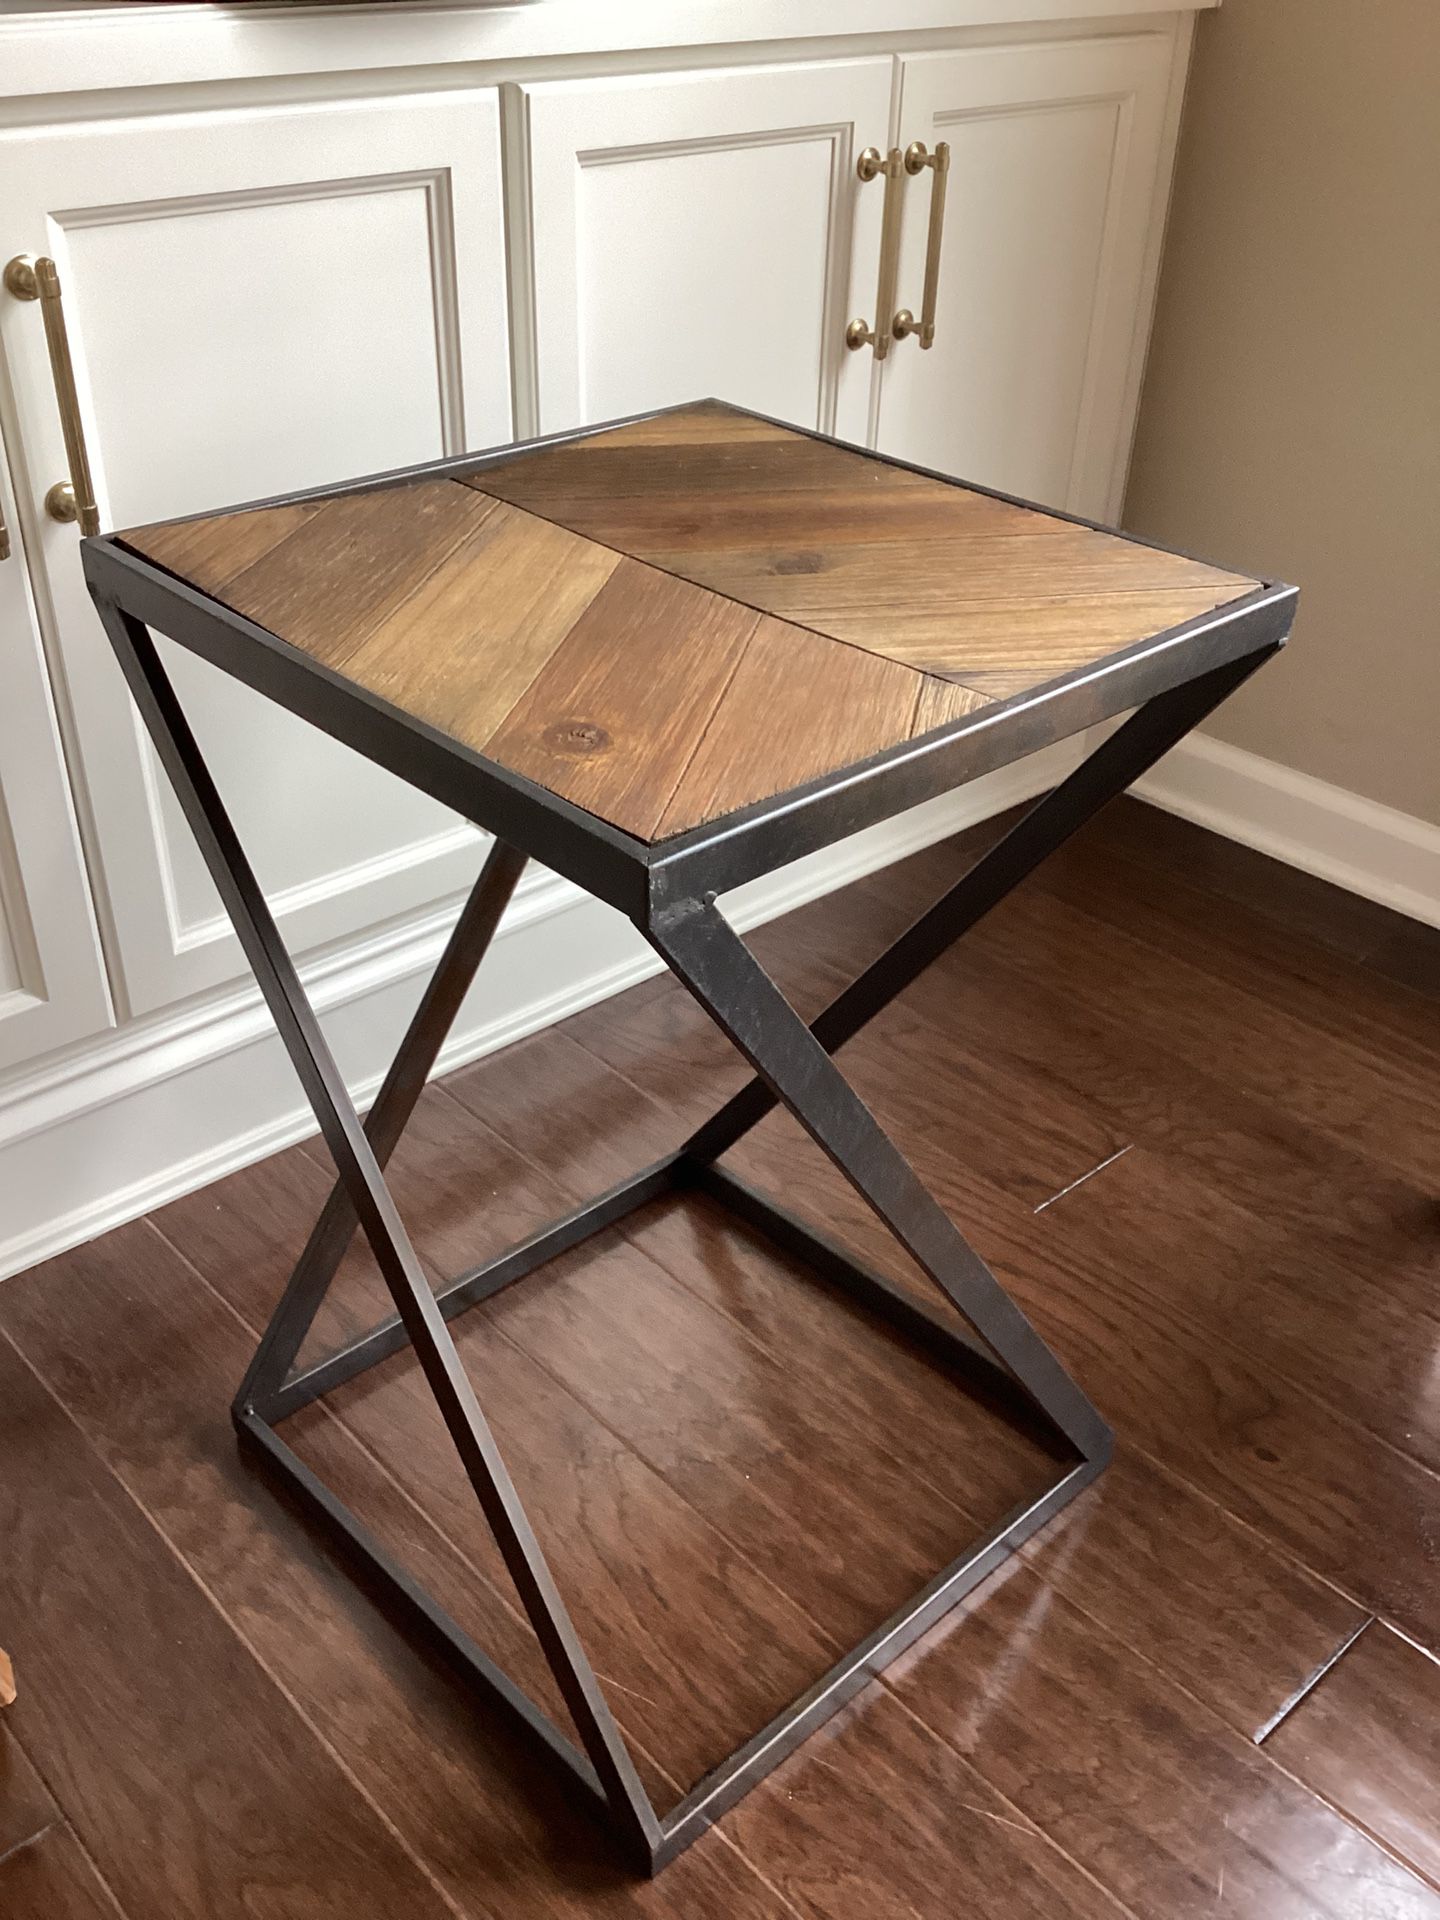 Metal & herringbone pattern wood top table (15.5”x23.5”T) slightly weathered, & wood is a little lower on one side - see last photo)